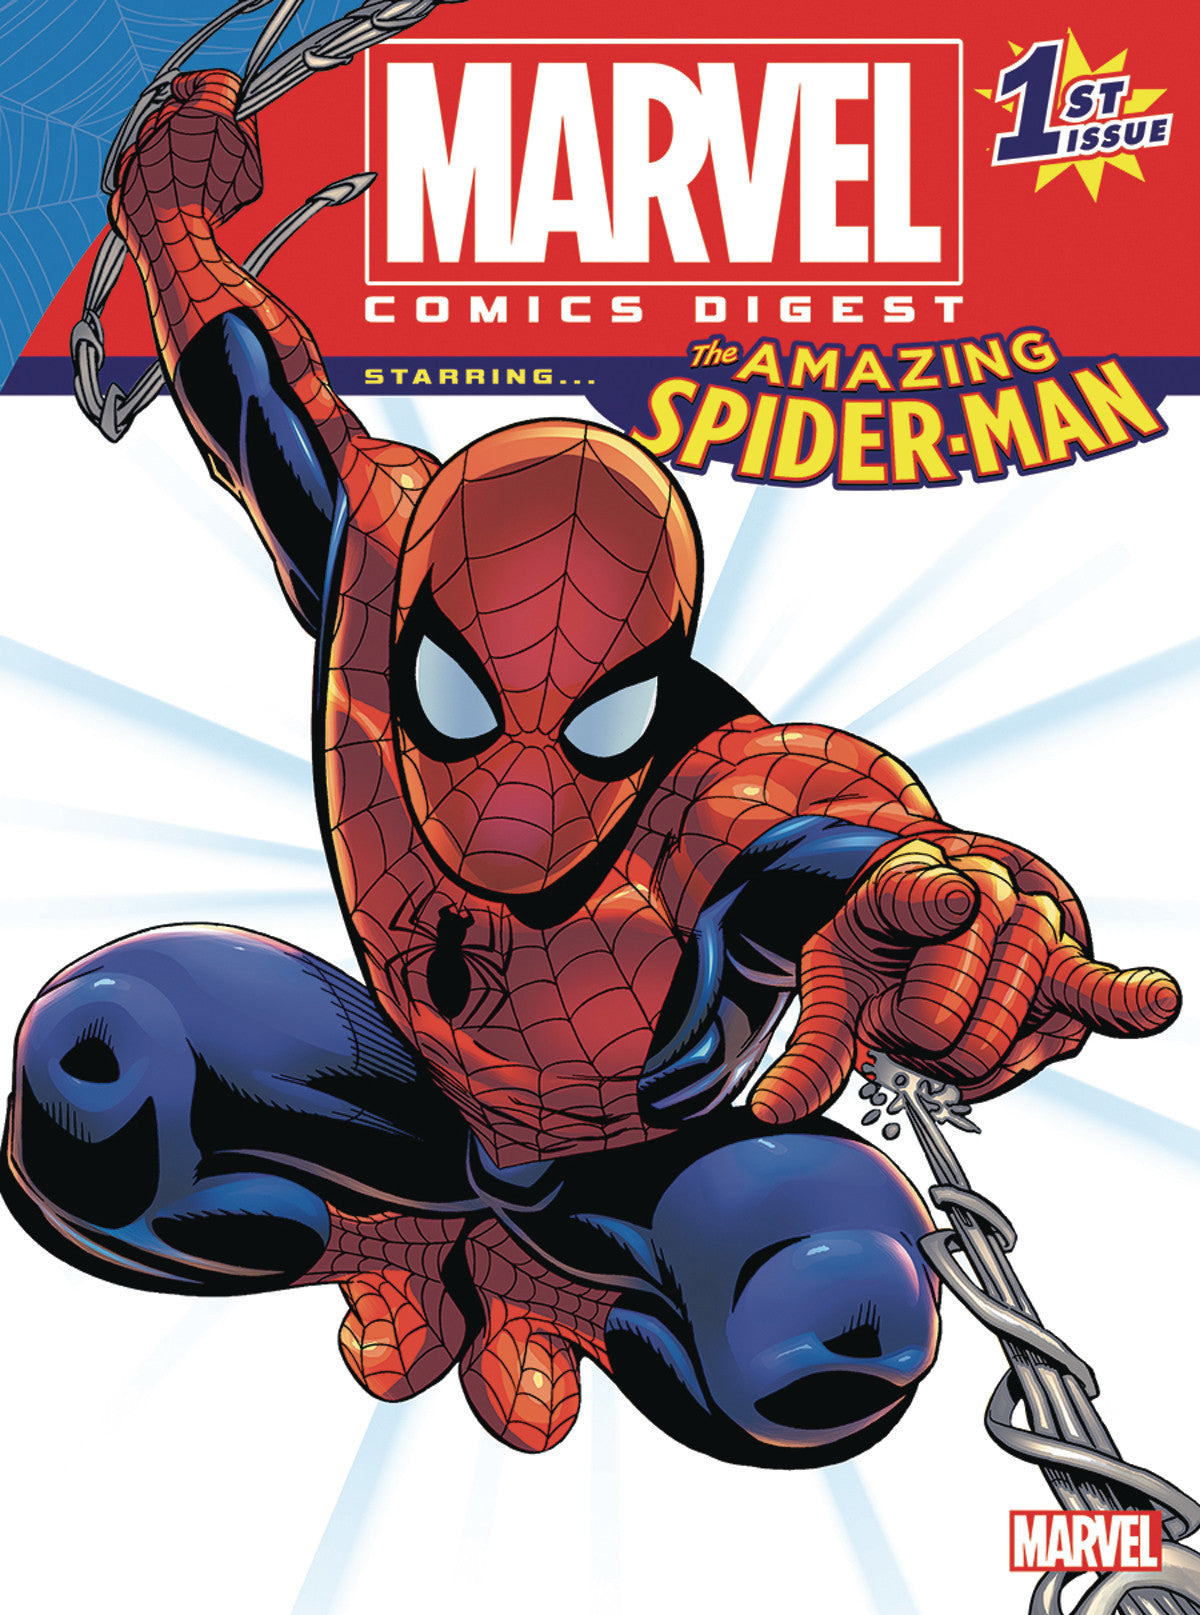 MARVEL COMICS DIGEST #1 AMAZING SPIDER-MAN COVER